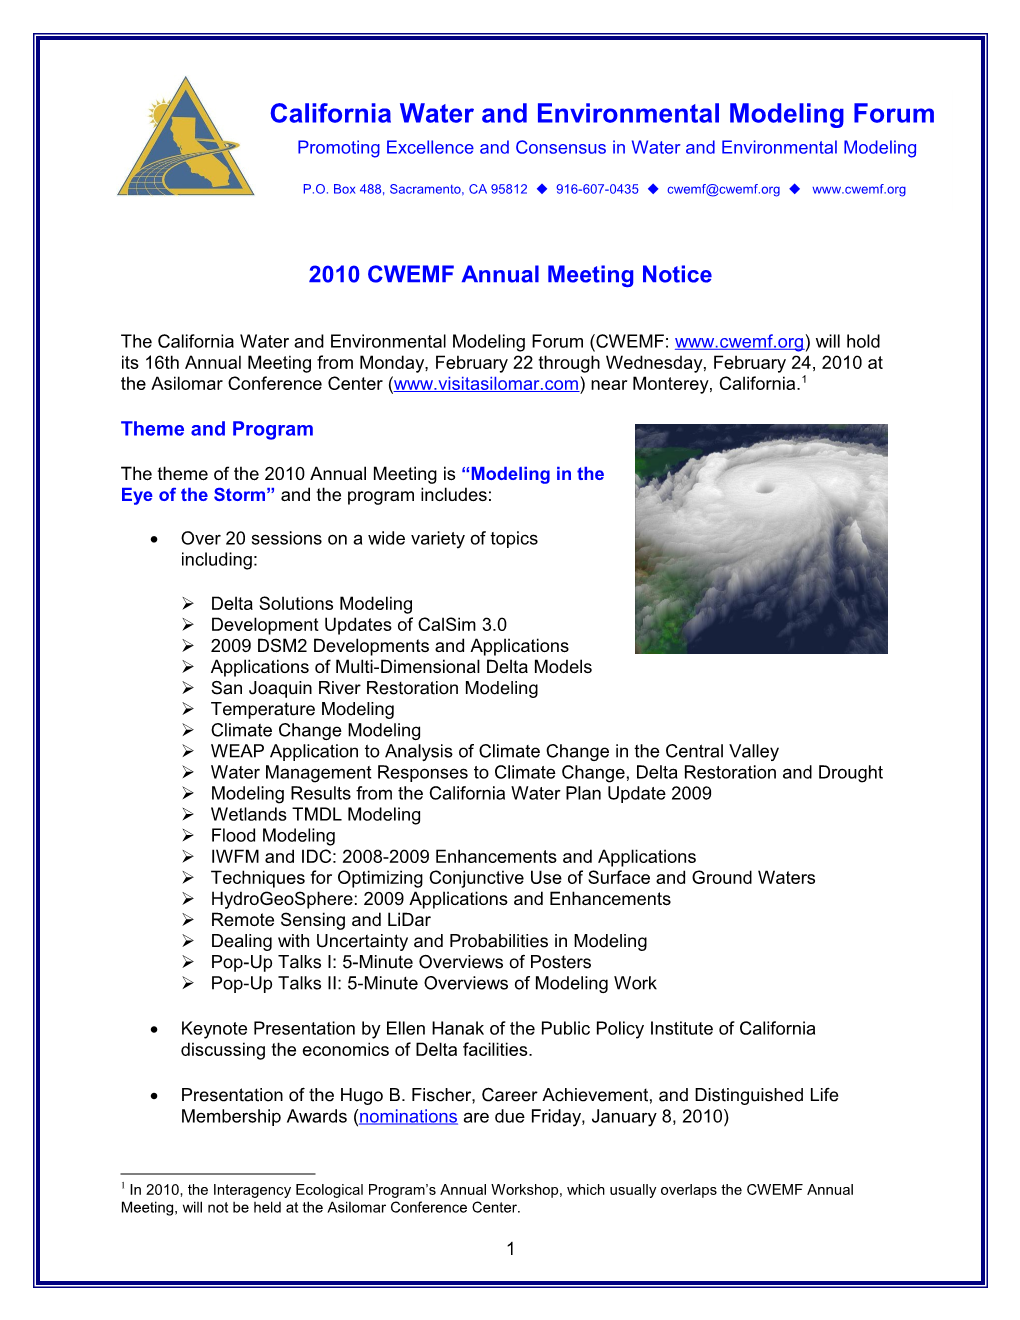 2010 CWEMF Annual Meeting Notice